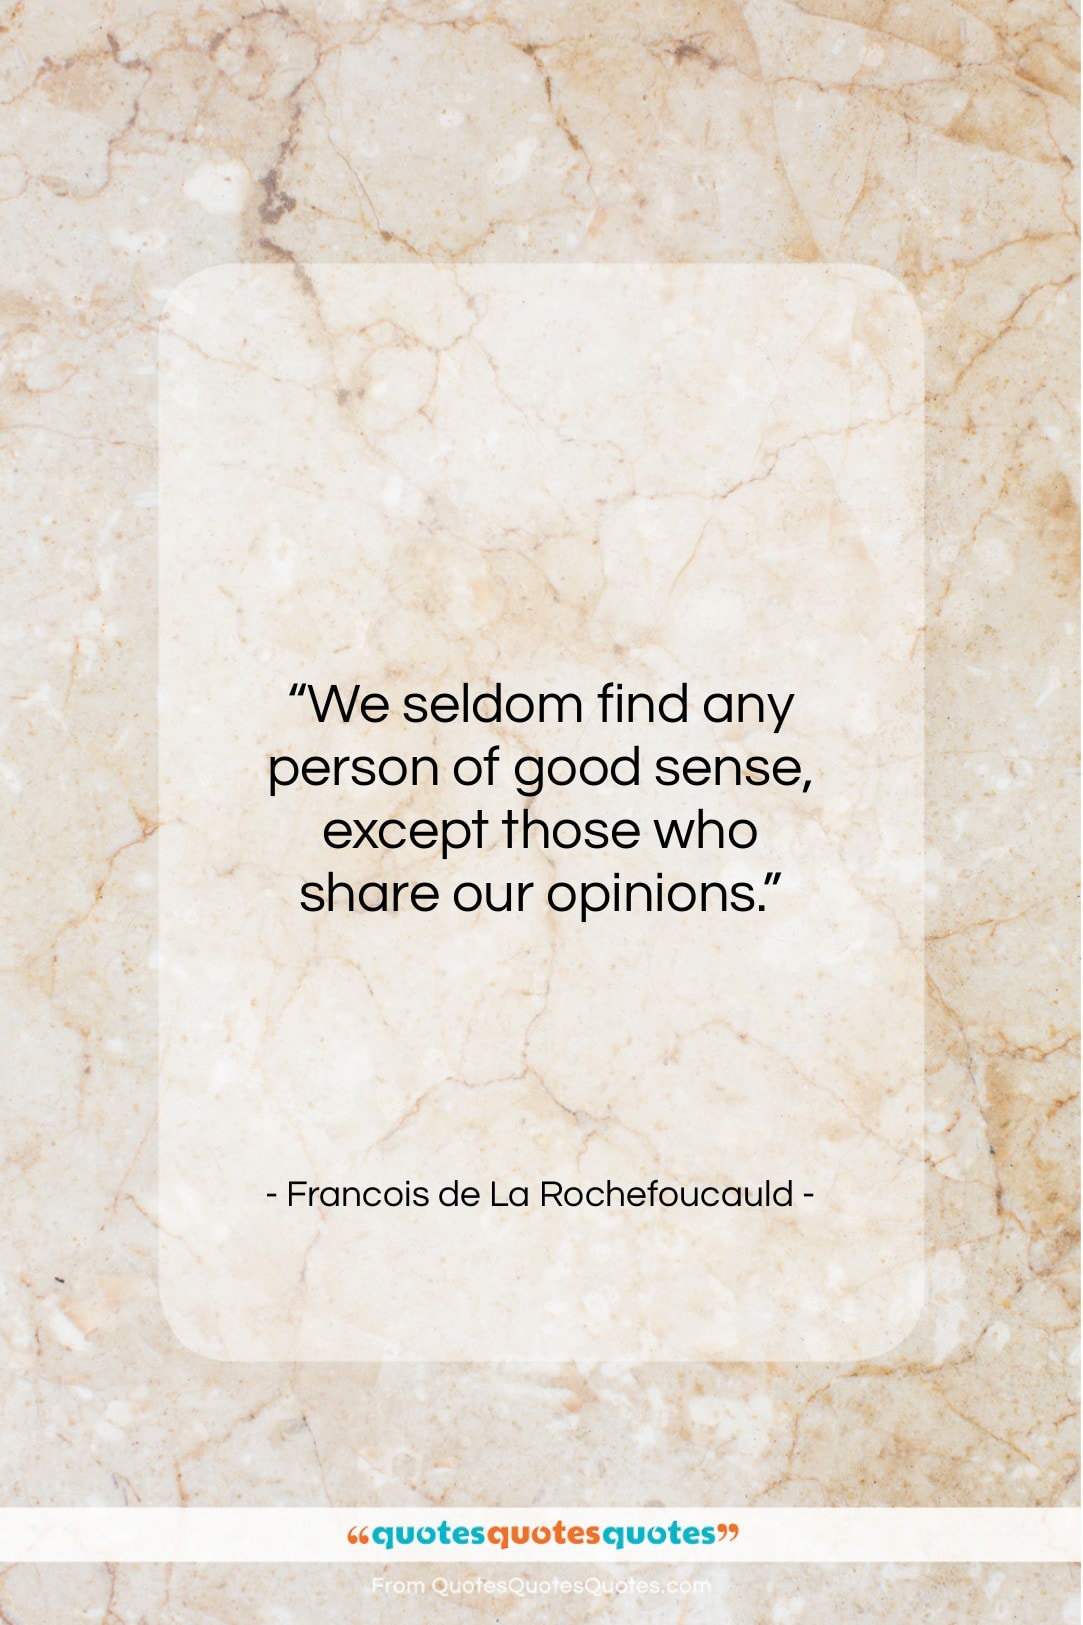 Francois de La Rochefoucauld quote: “We seldom find any person of good…”- at QuotesQuotesQuotes.com